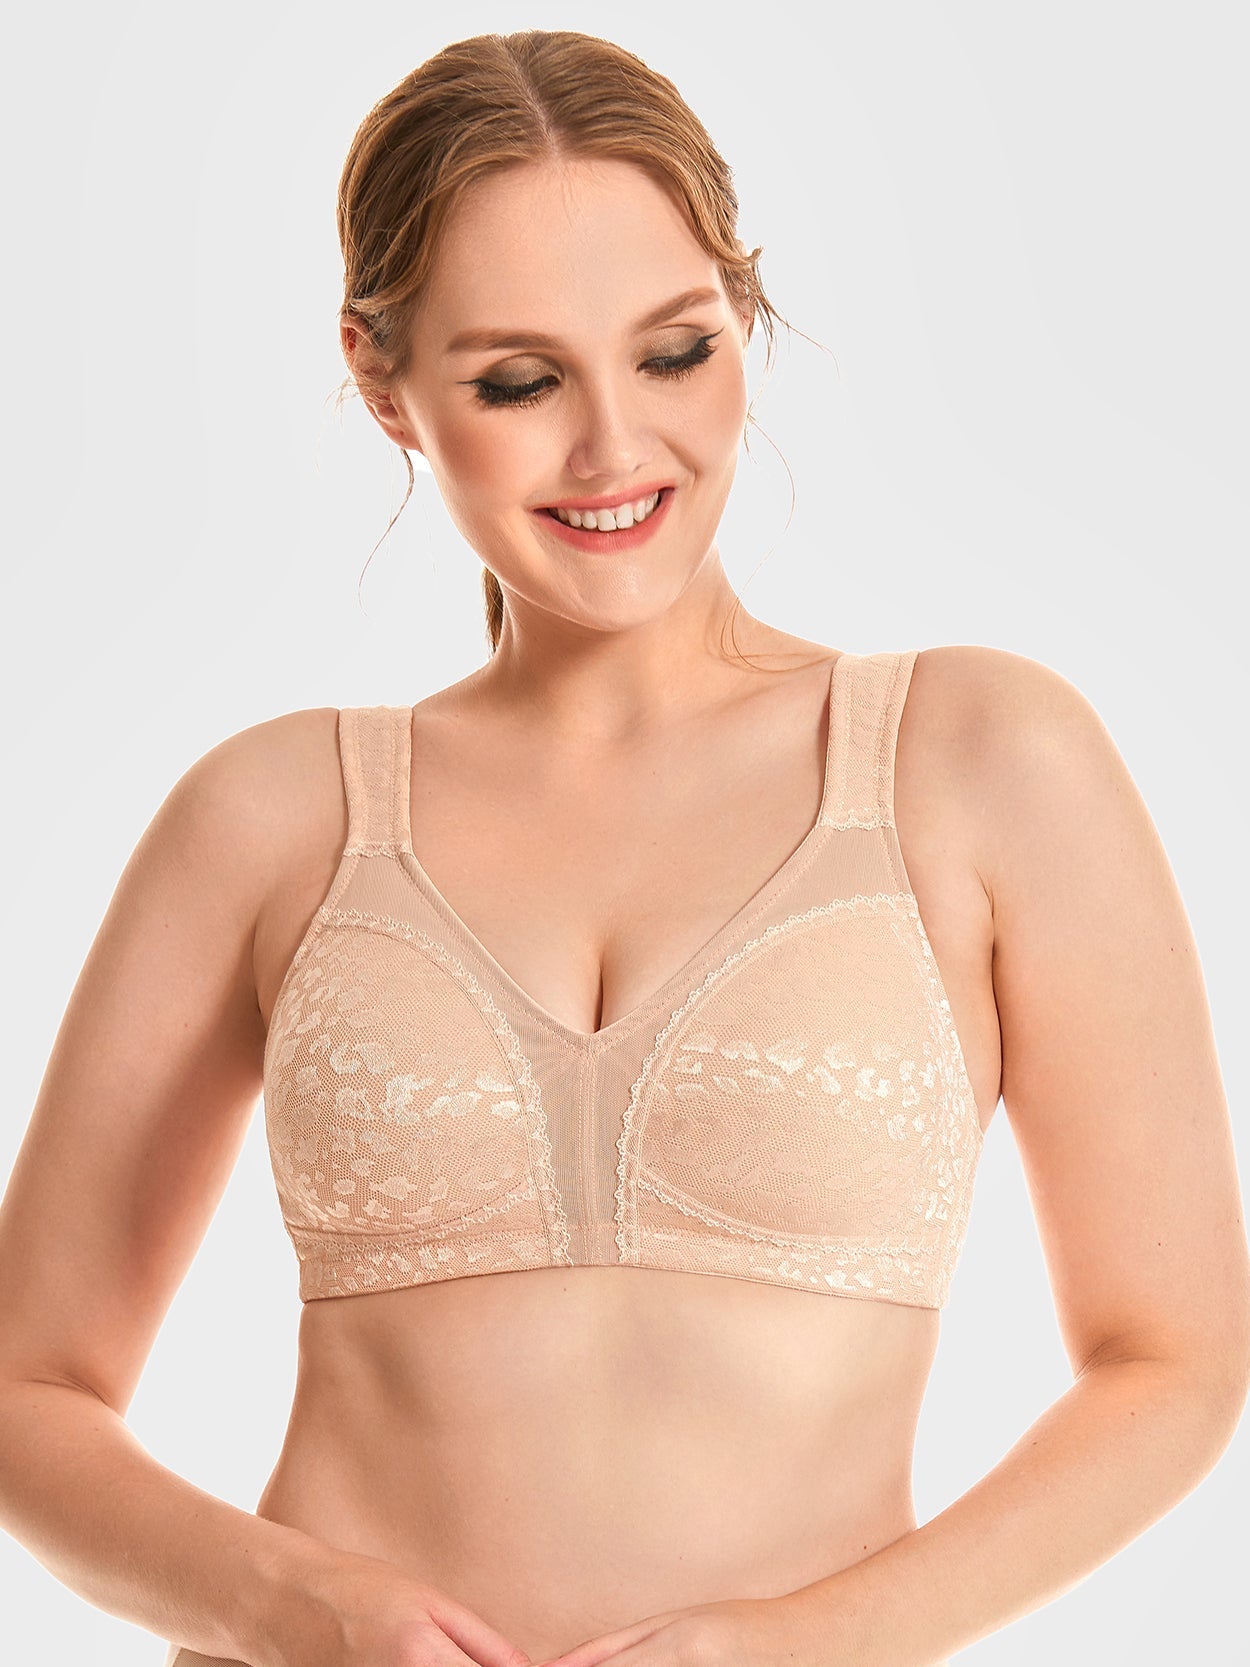 Buy online Non Padded Minimizer Bra from lingerie for Women by